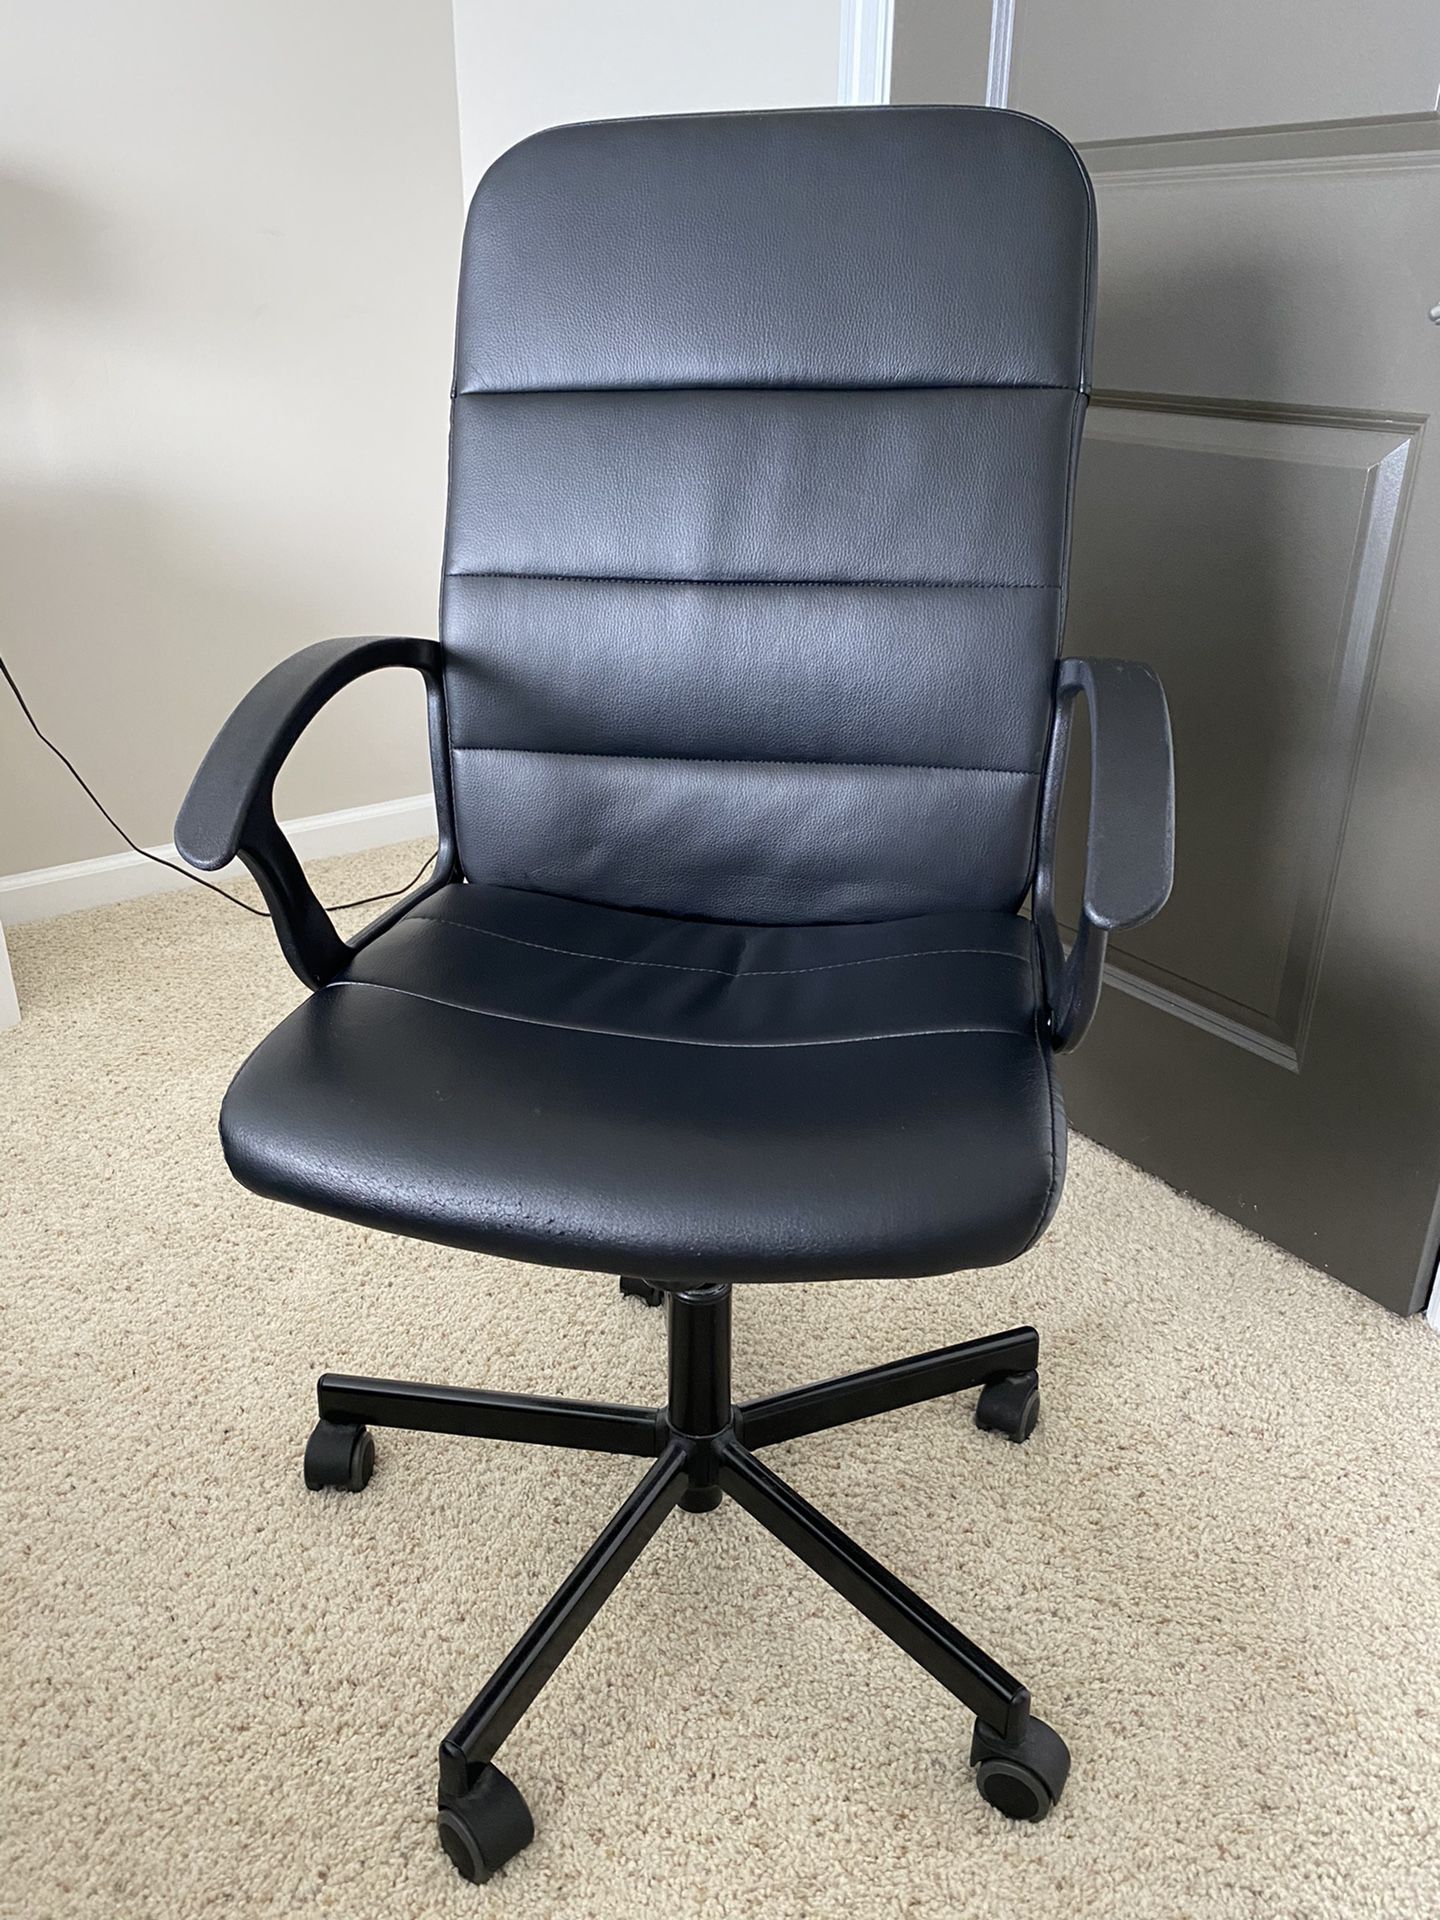 Chair (IKEA original price $59.99)